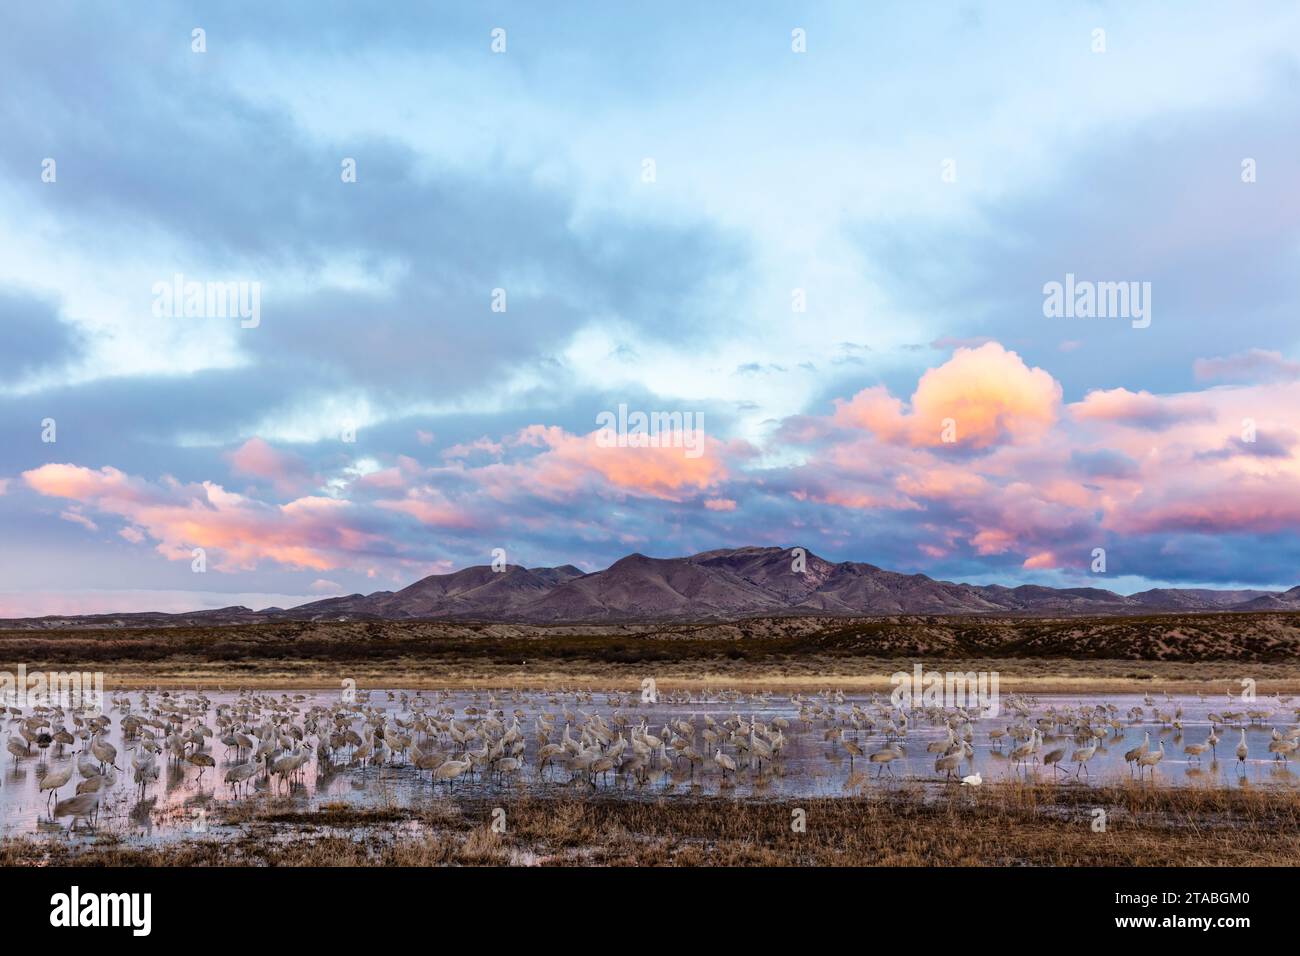 Sandhill Krane am Teich bei Sonnenaufgang, Bosque del Apache, New Mexico Stockfoto